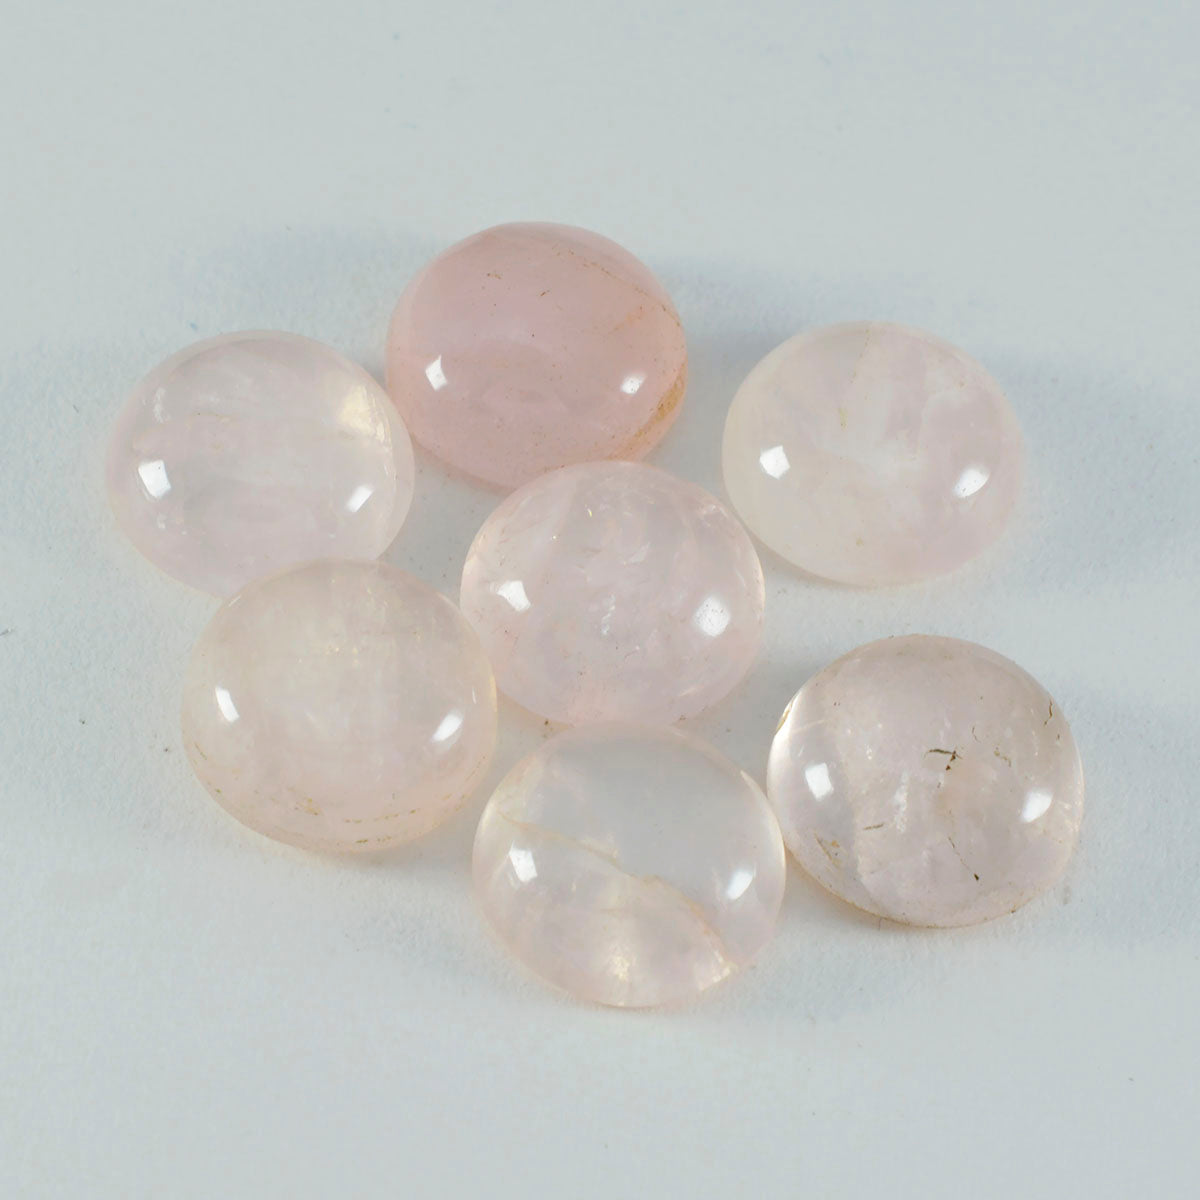 Riyogems 1PC Pink Rose Quartz Cabochon 15x15 mm Round Shape excellent Quality Loose Stone